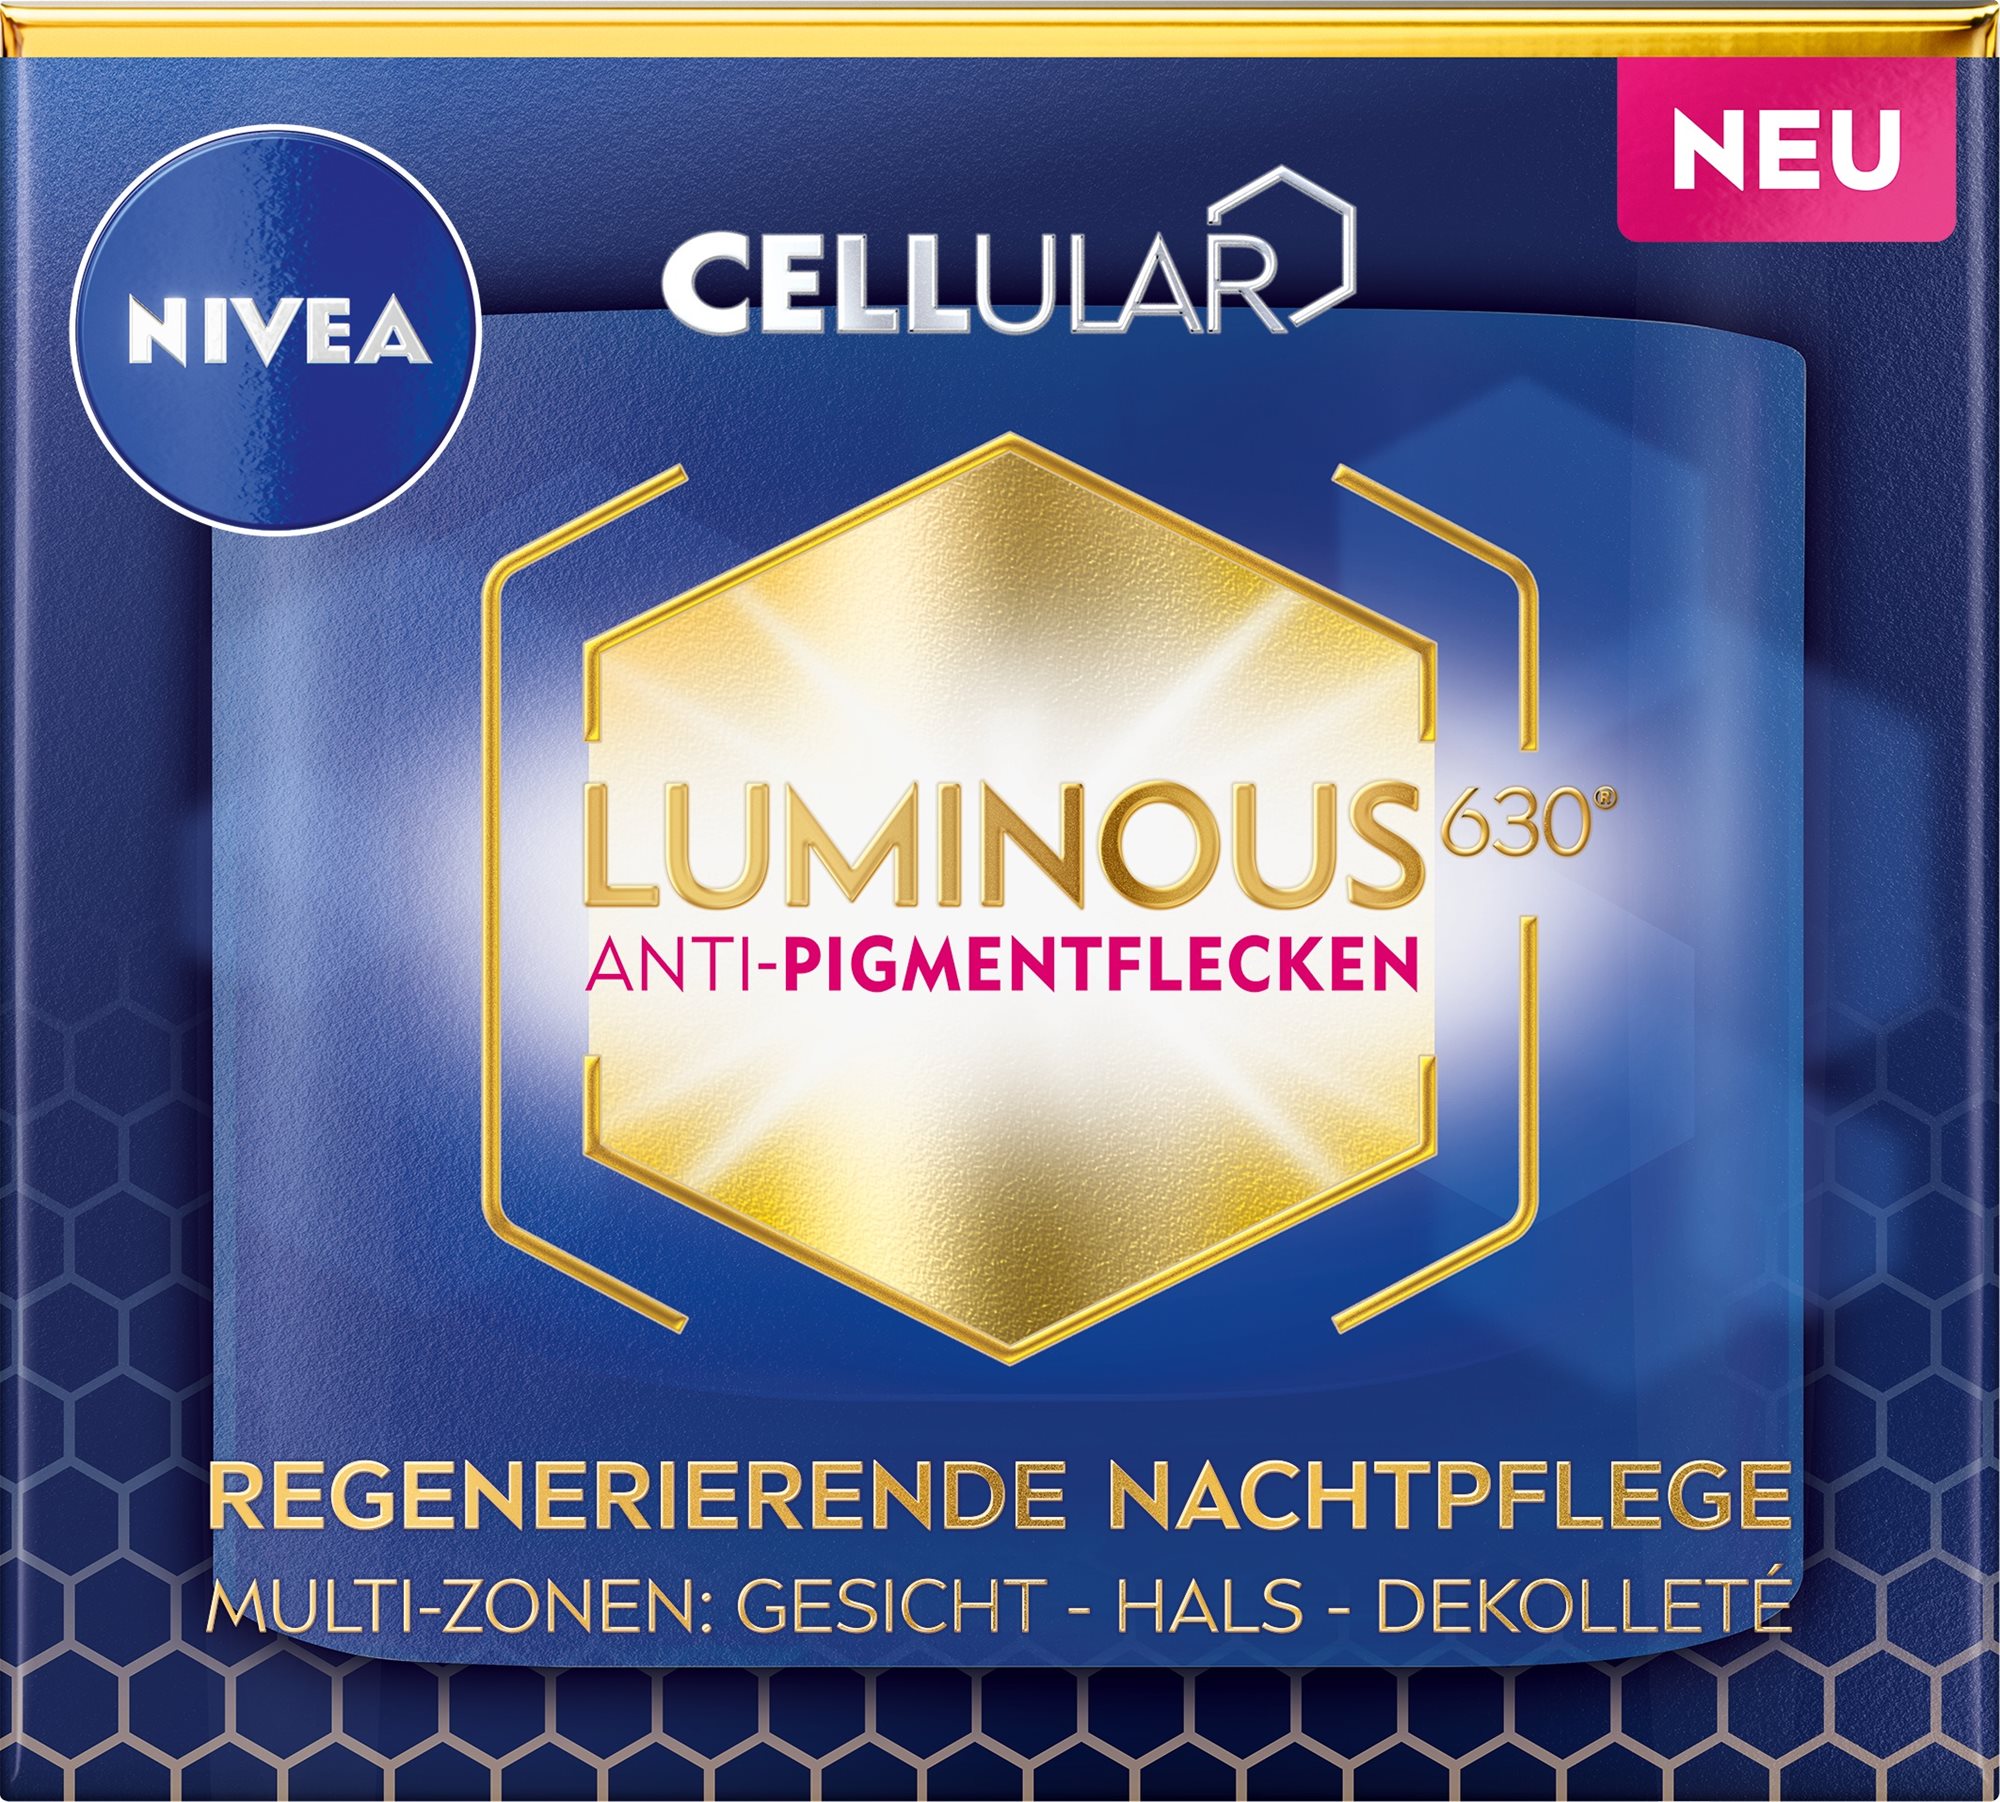 NIVEA Cellular Luminous 630 Night creme 50 ml